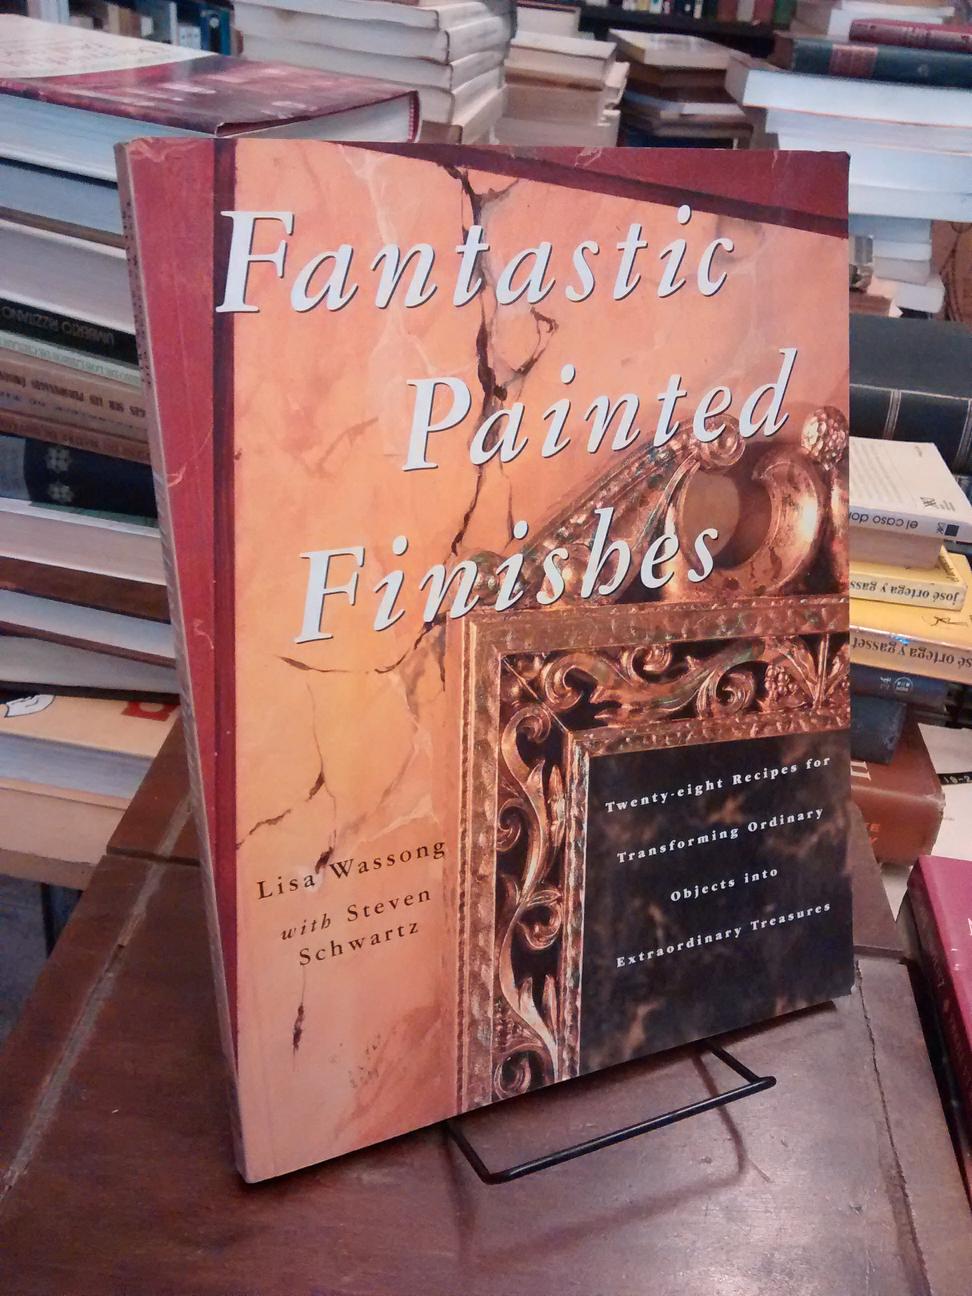 Fantastic Painted Finishes - Lisa Wassong · Steven Schwartz